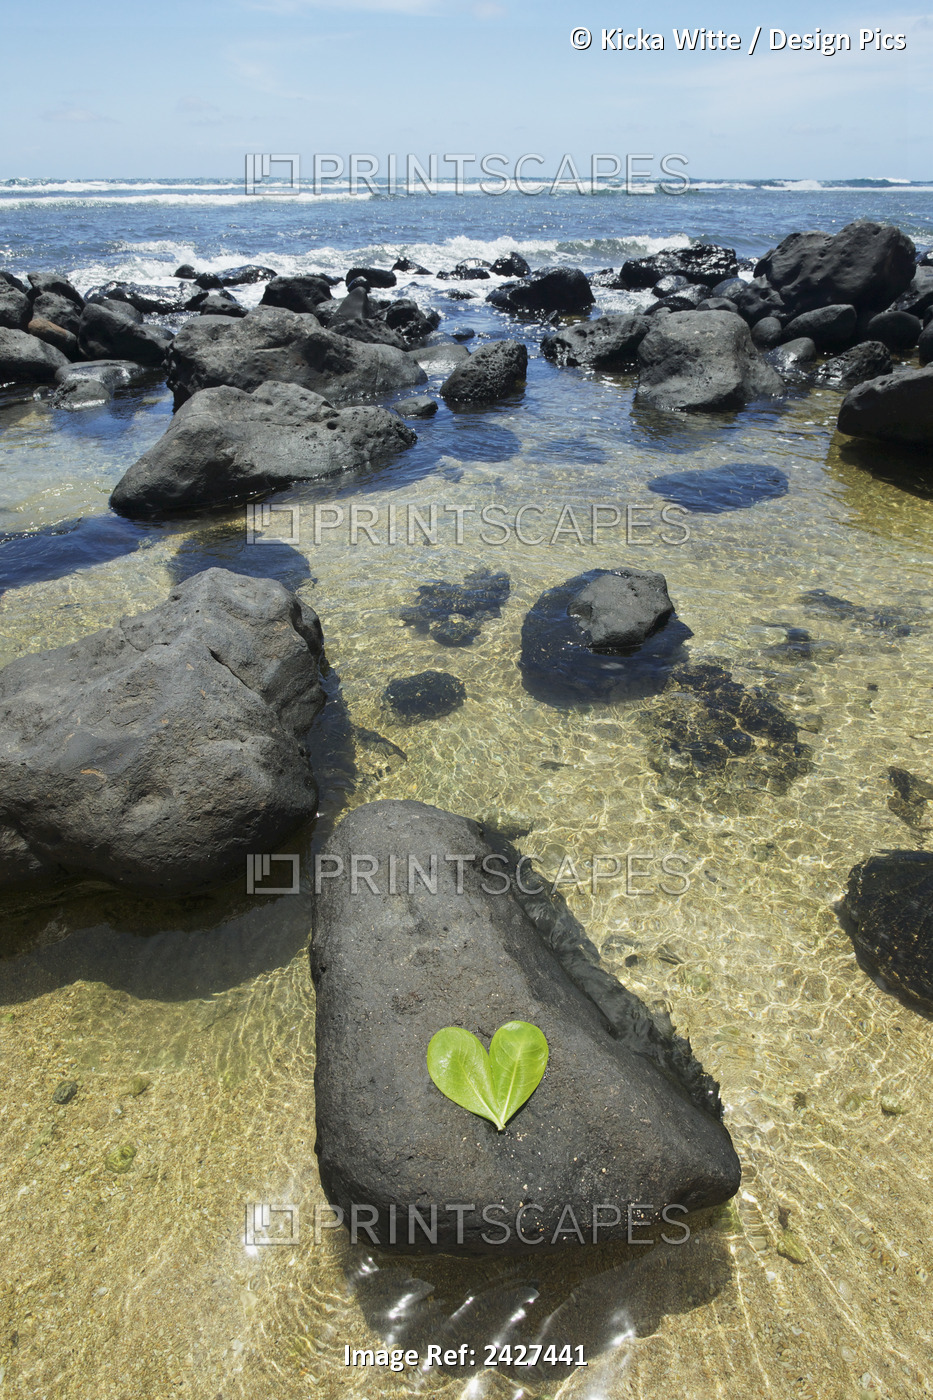 Heart-Shaped Leaf On A Rock In The Tide; Kauai, Hawaii, United States Of America